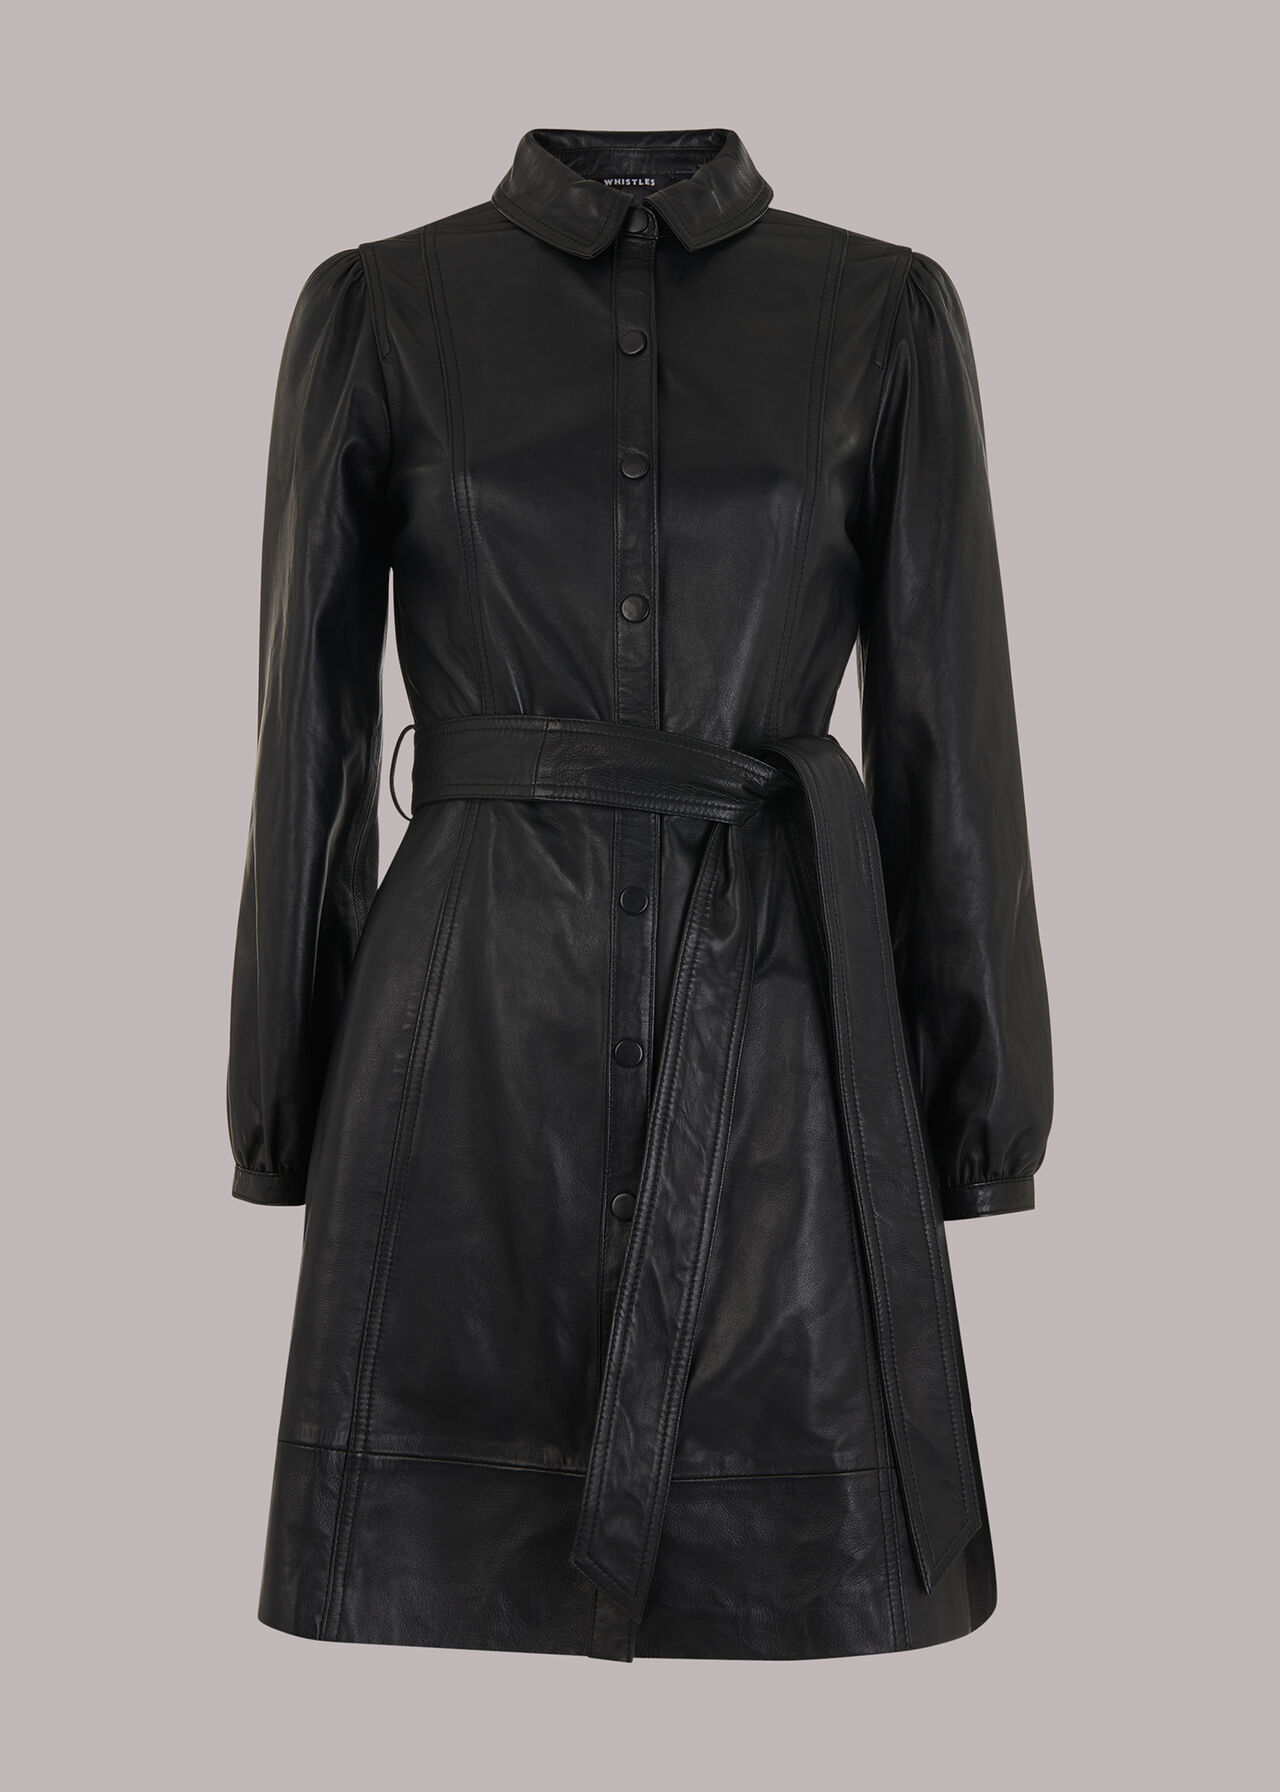 Black Phoebe Short Leather Dress | WHISTLES